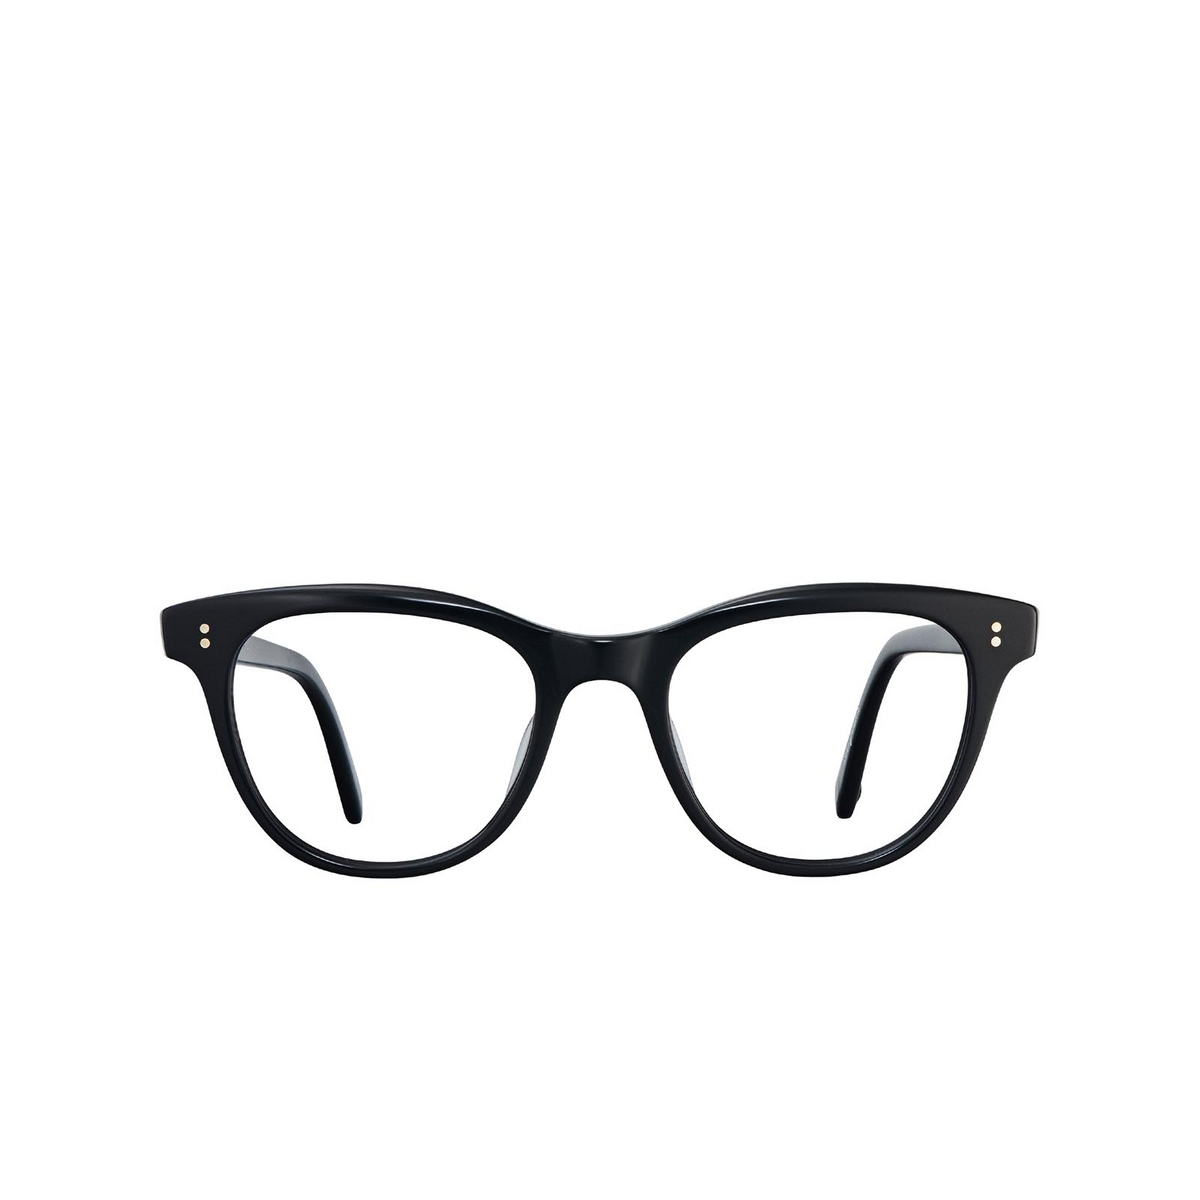 Garrett Leight LOYOLA Eyeglasses BK Black - front view